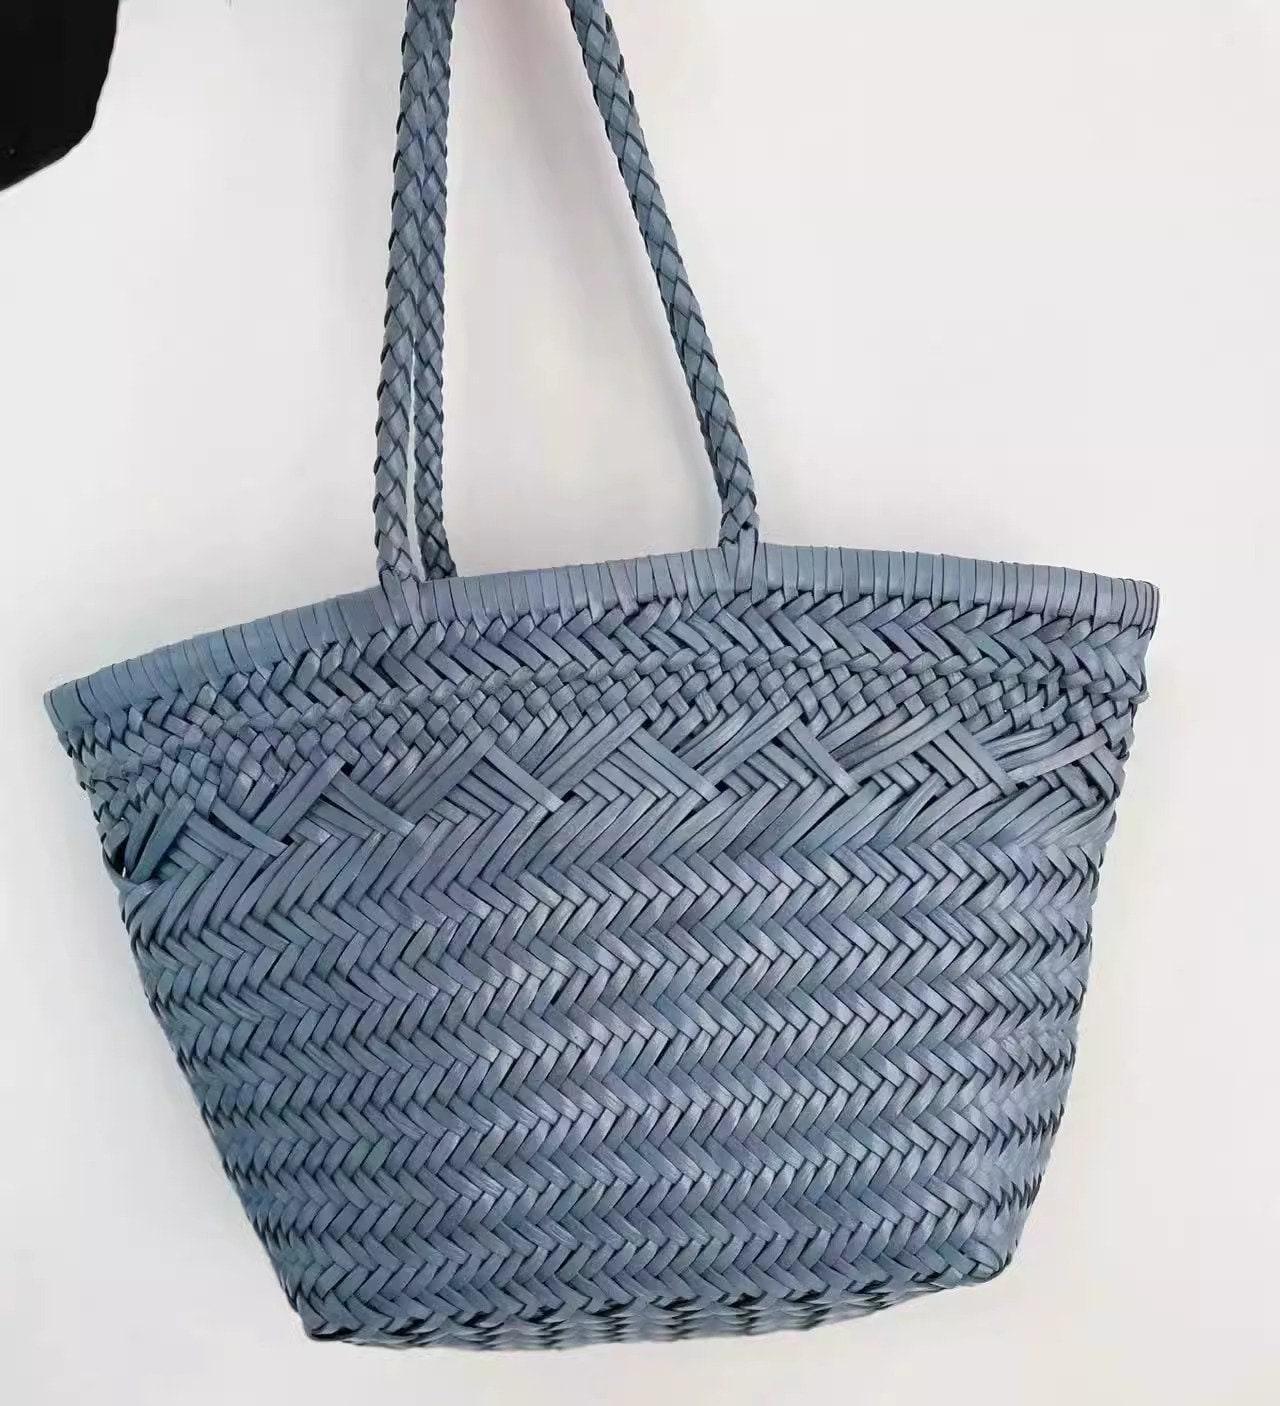 Handcrafted Grain Leather Summer Woven Bag, Woven Triple Jump Bamboo Style HandBag, Beach Bag, Basket Bag, Forest Green, Blue, White